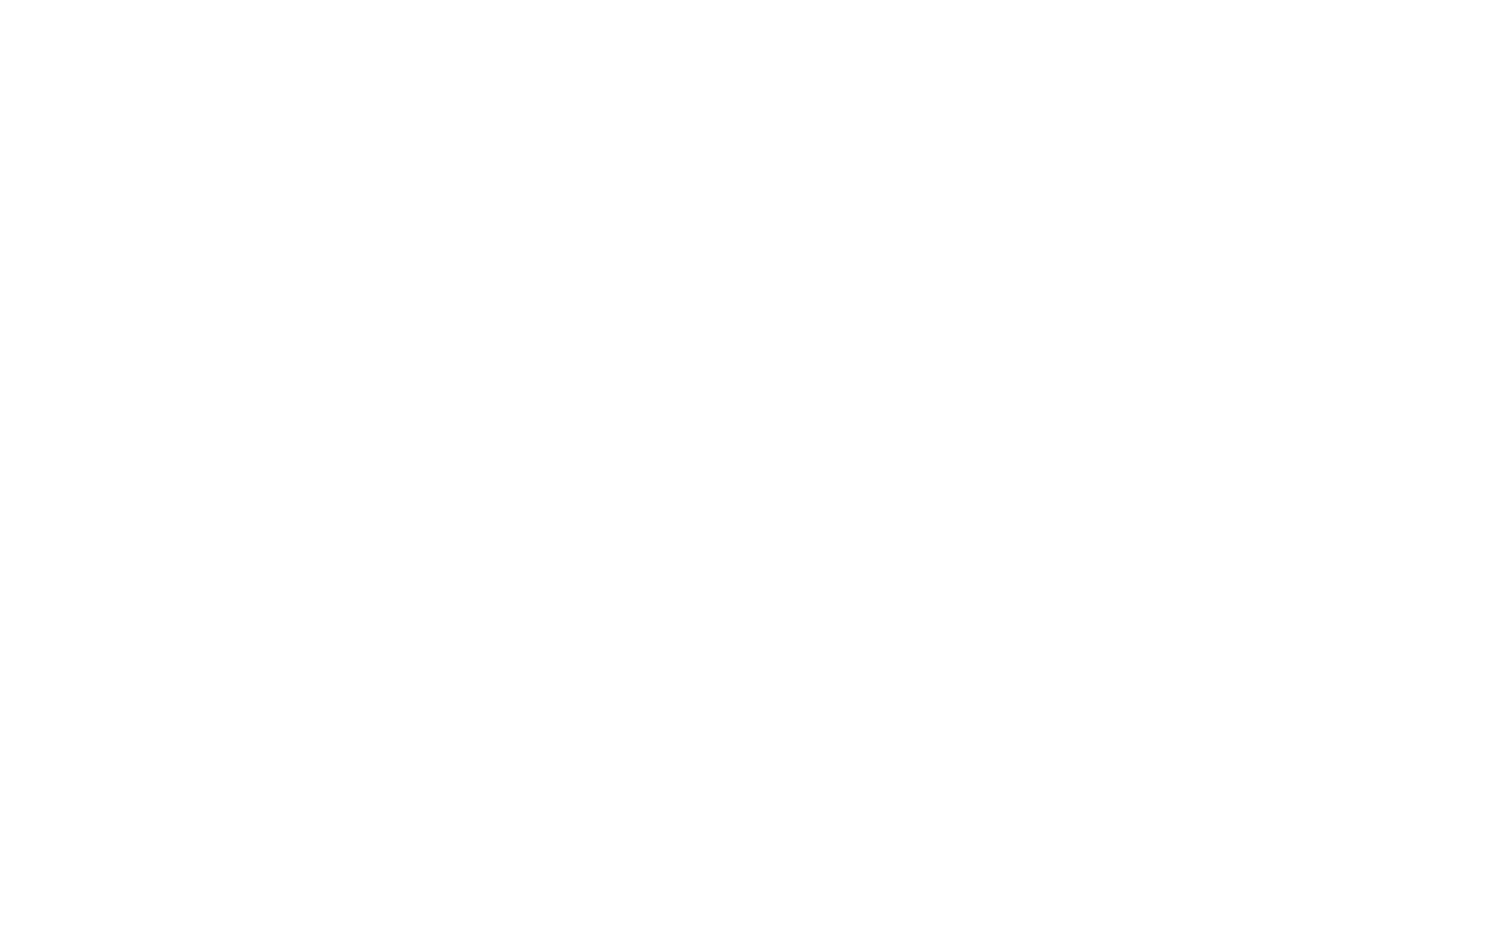 Introvert Leader Awakening